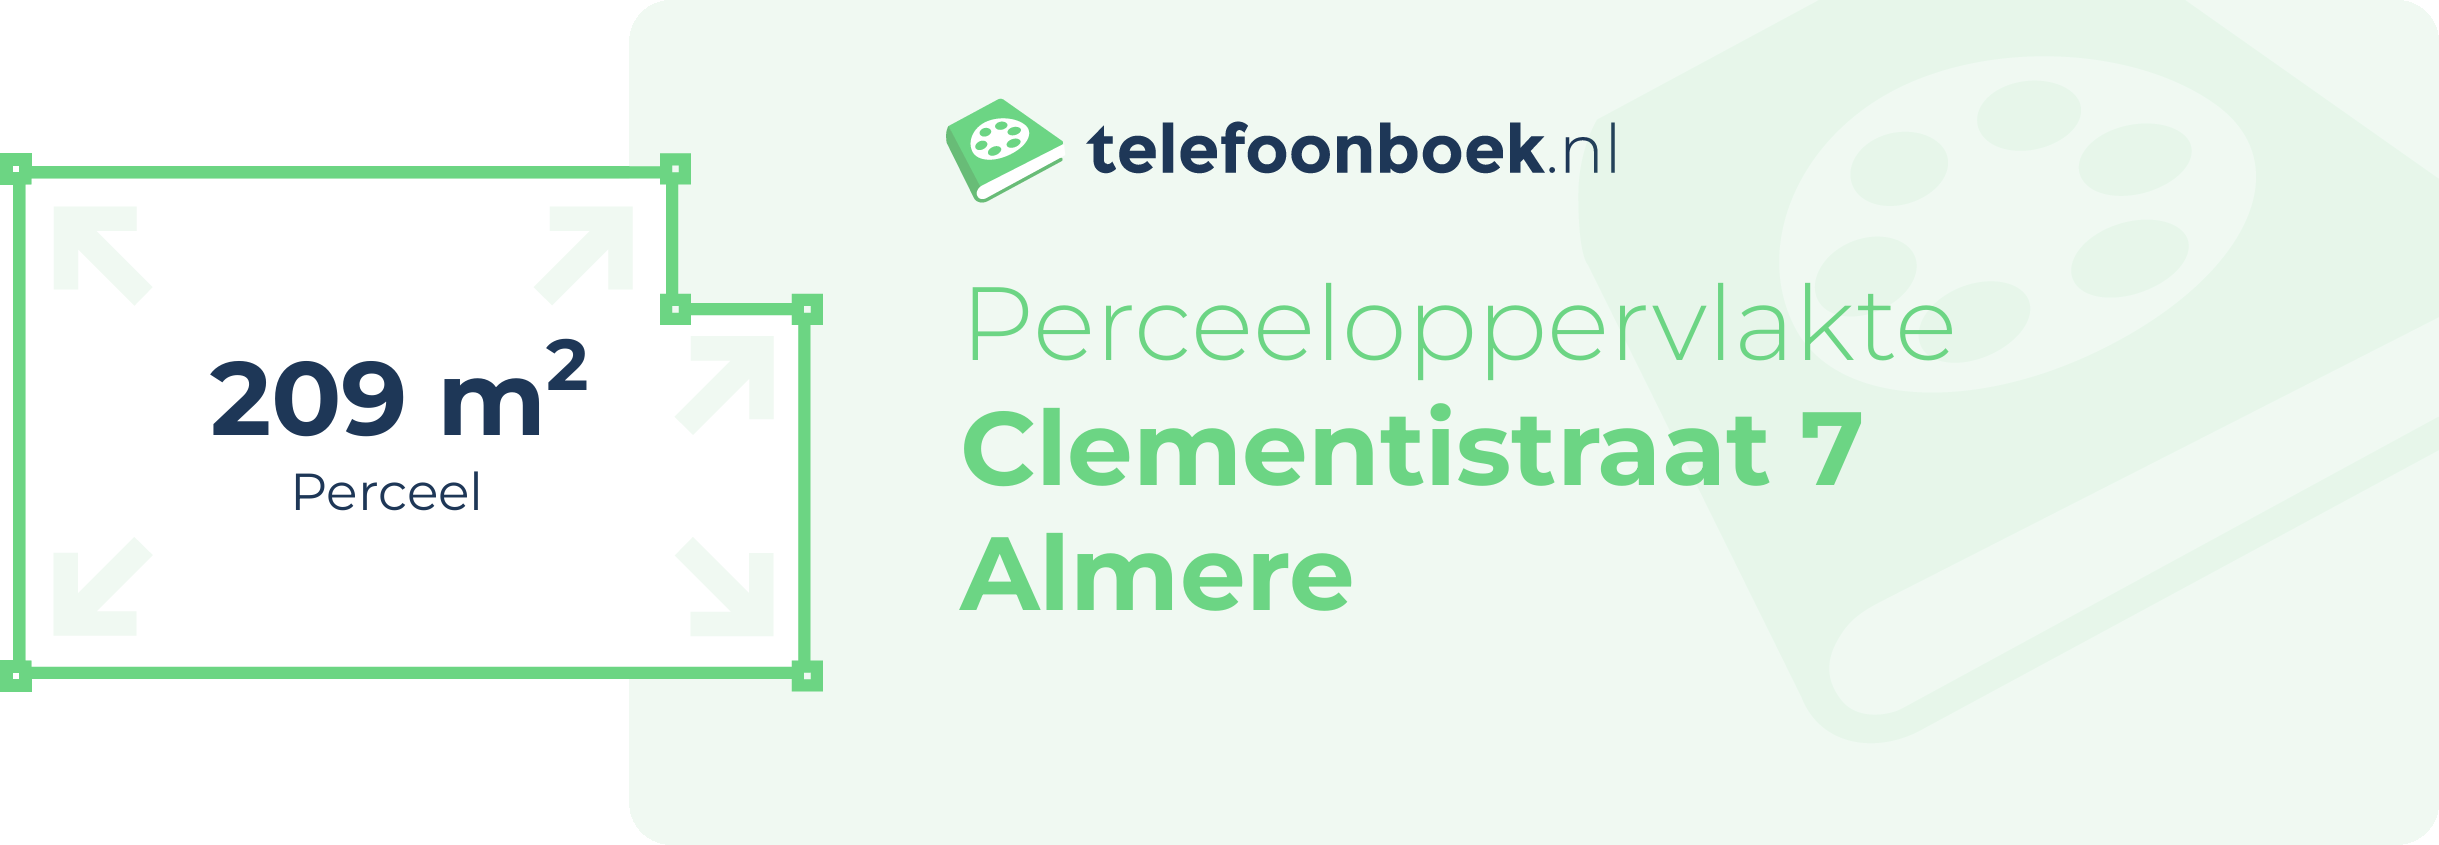 Perceeloppervlakte Clementistraat 7 Almere